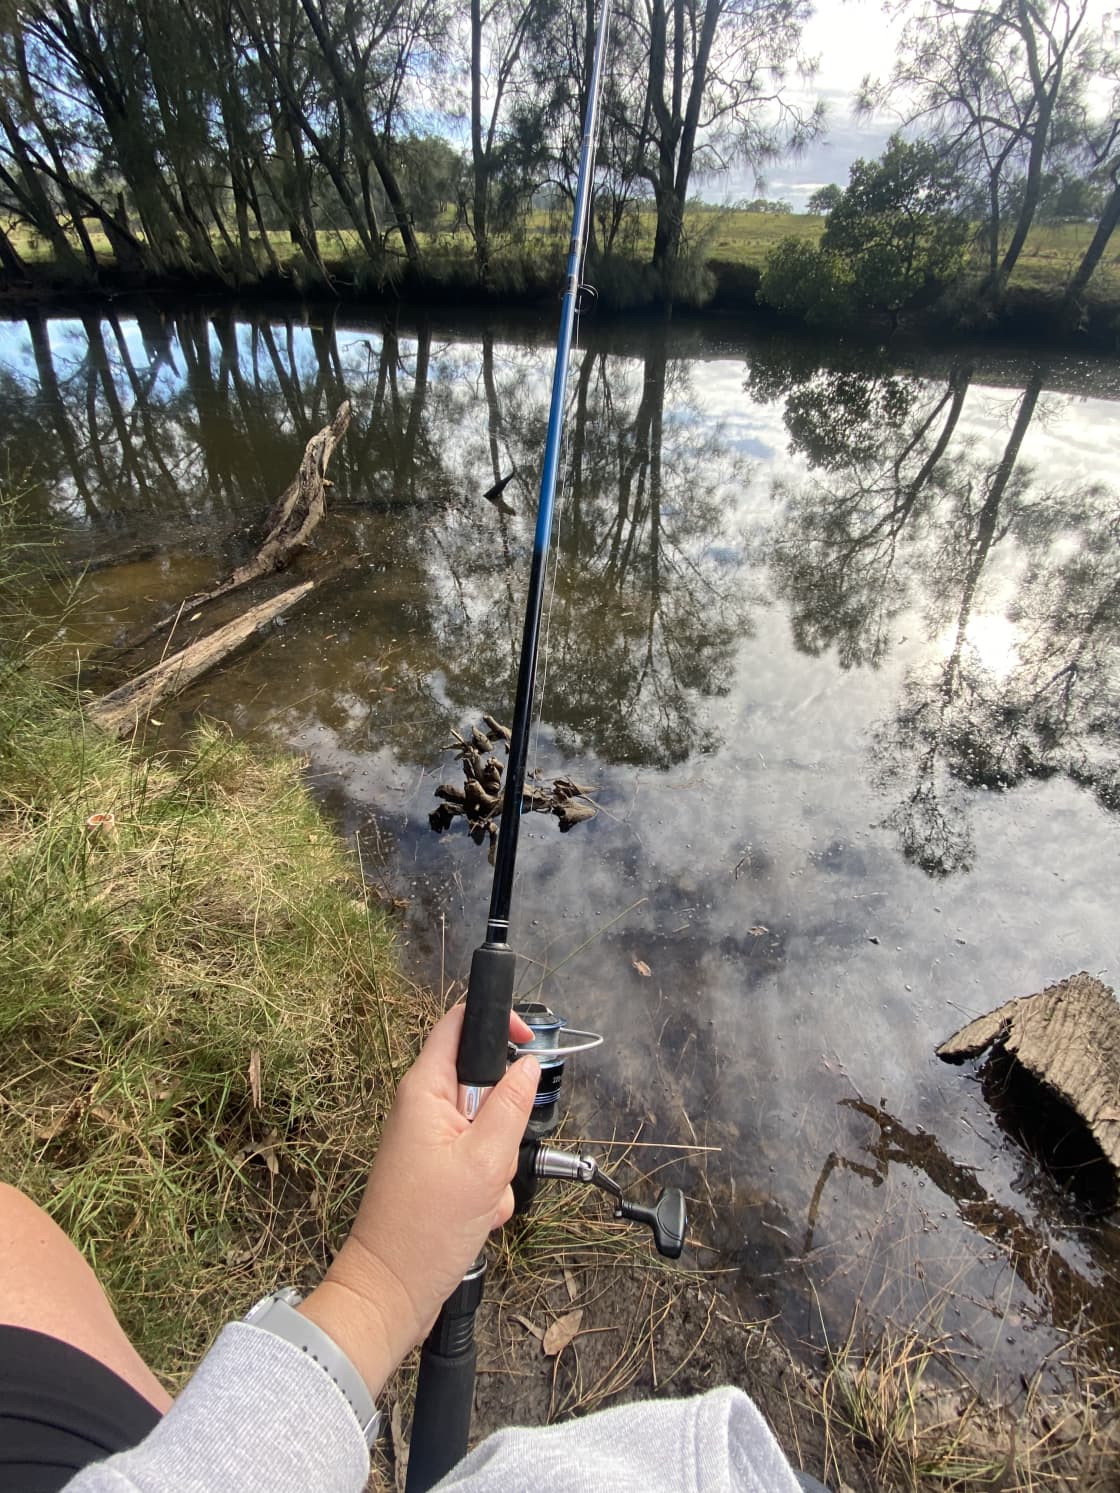 Bit of fishing